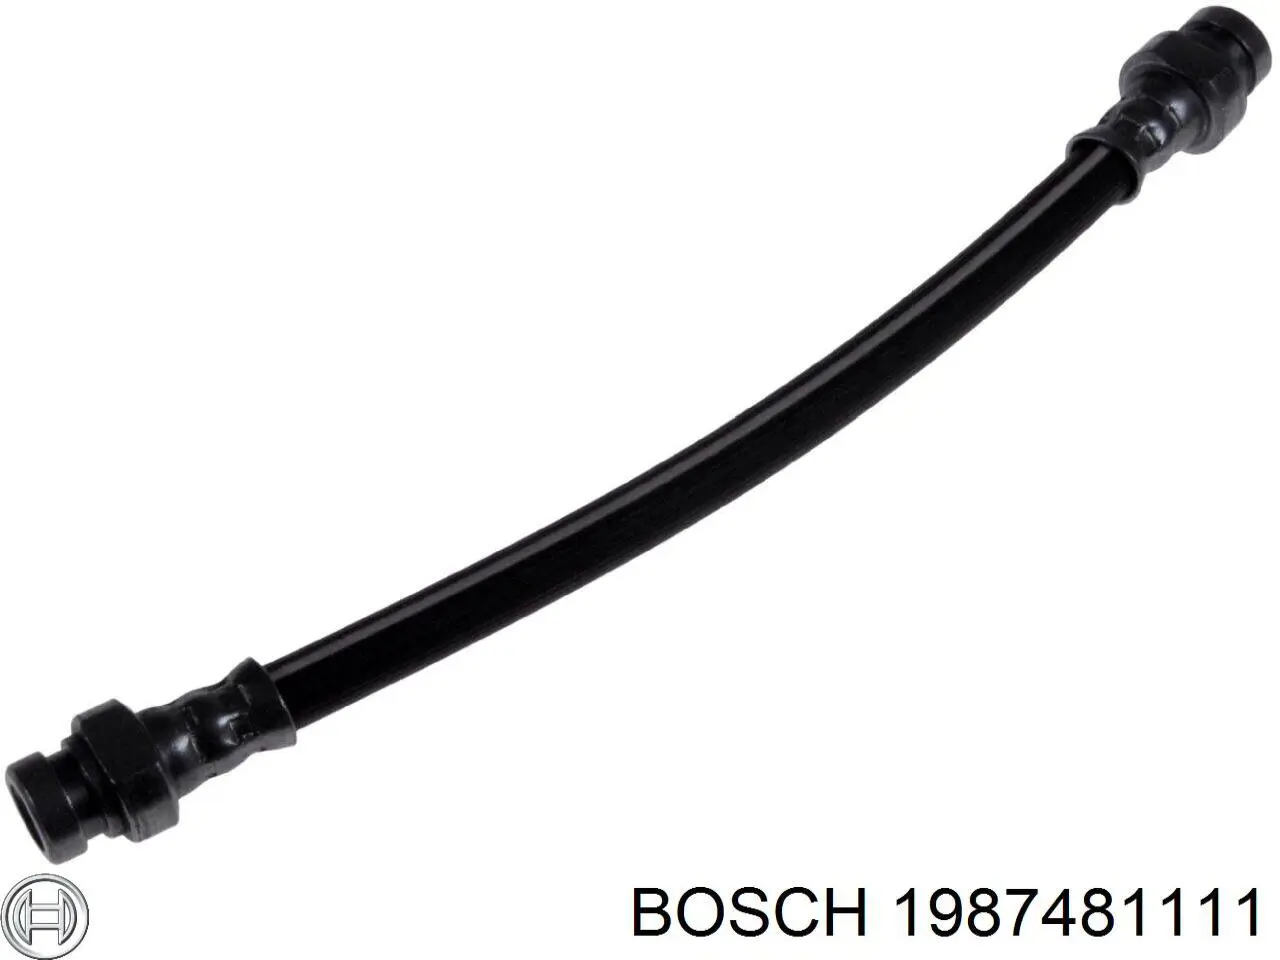 1987481111 Bosch latiguillo de freno trasero